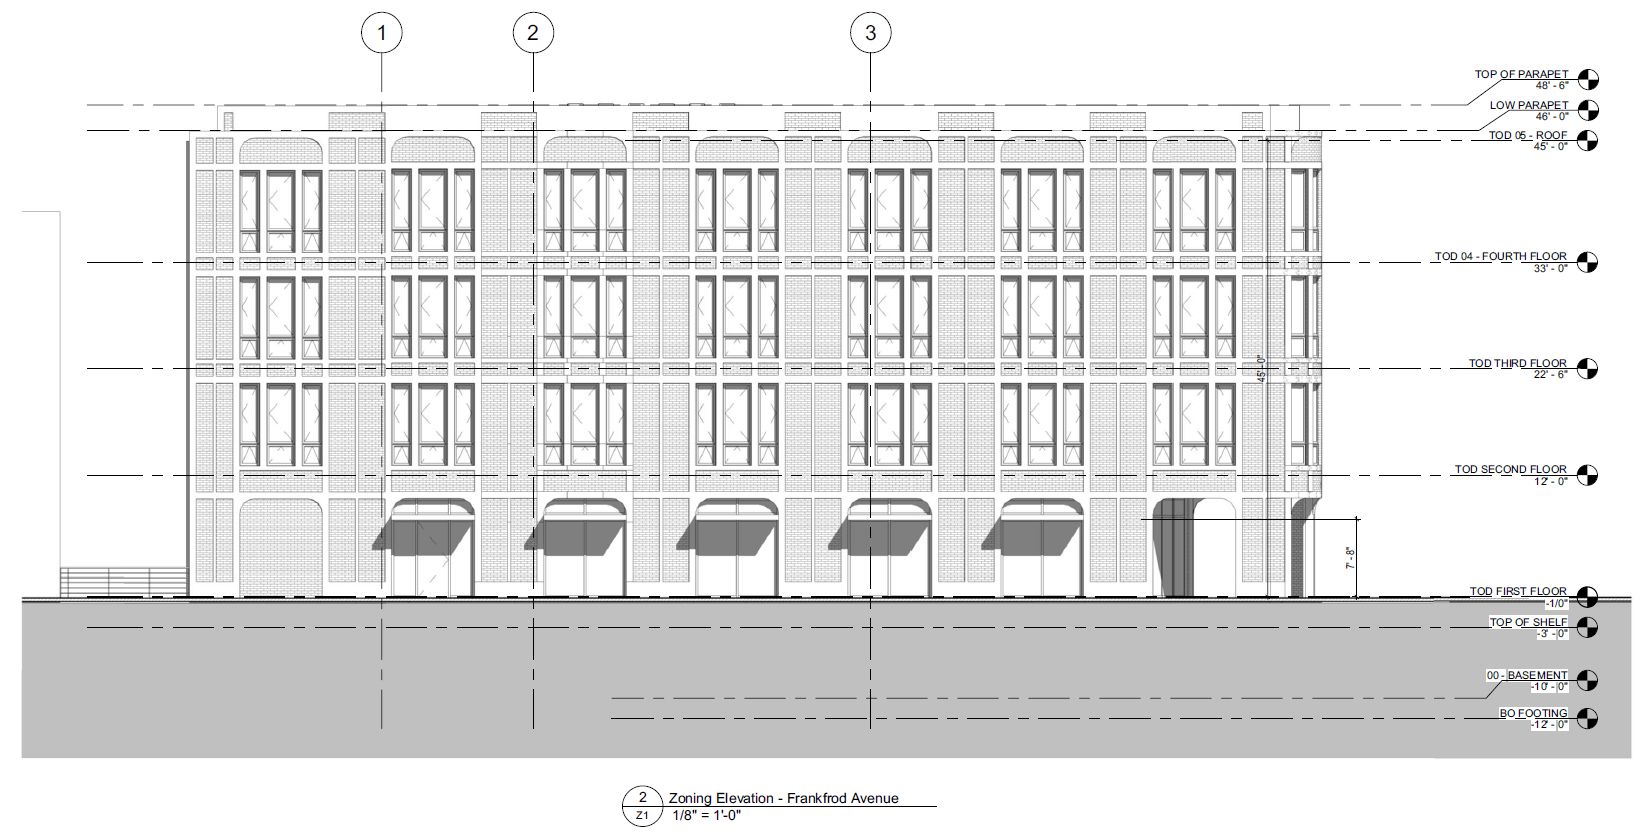 2401 Frankford Avenue. Building elevation. Credit: Ambit Architecture via the City of Philadelphia